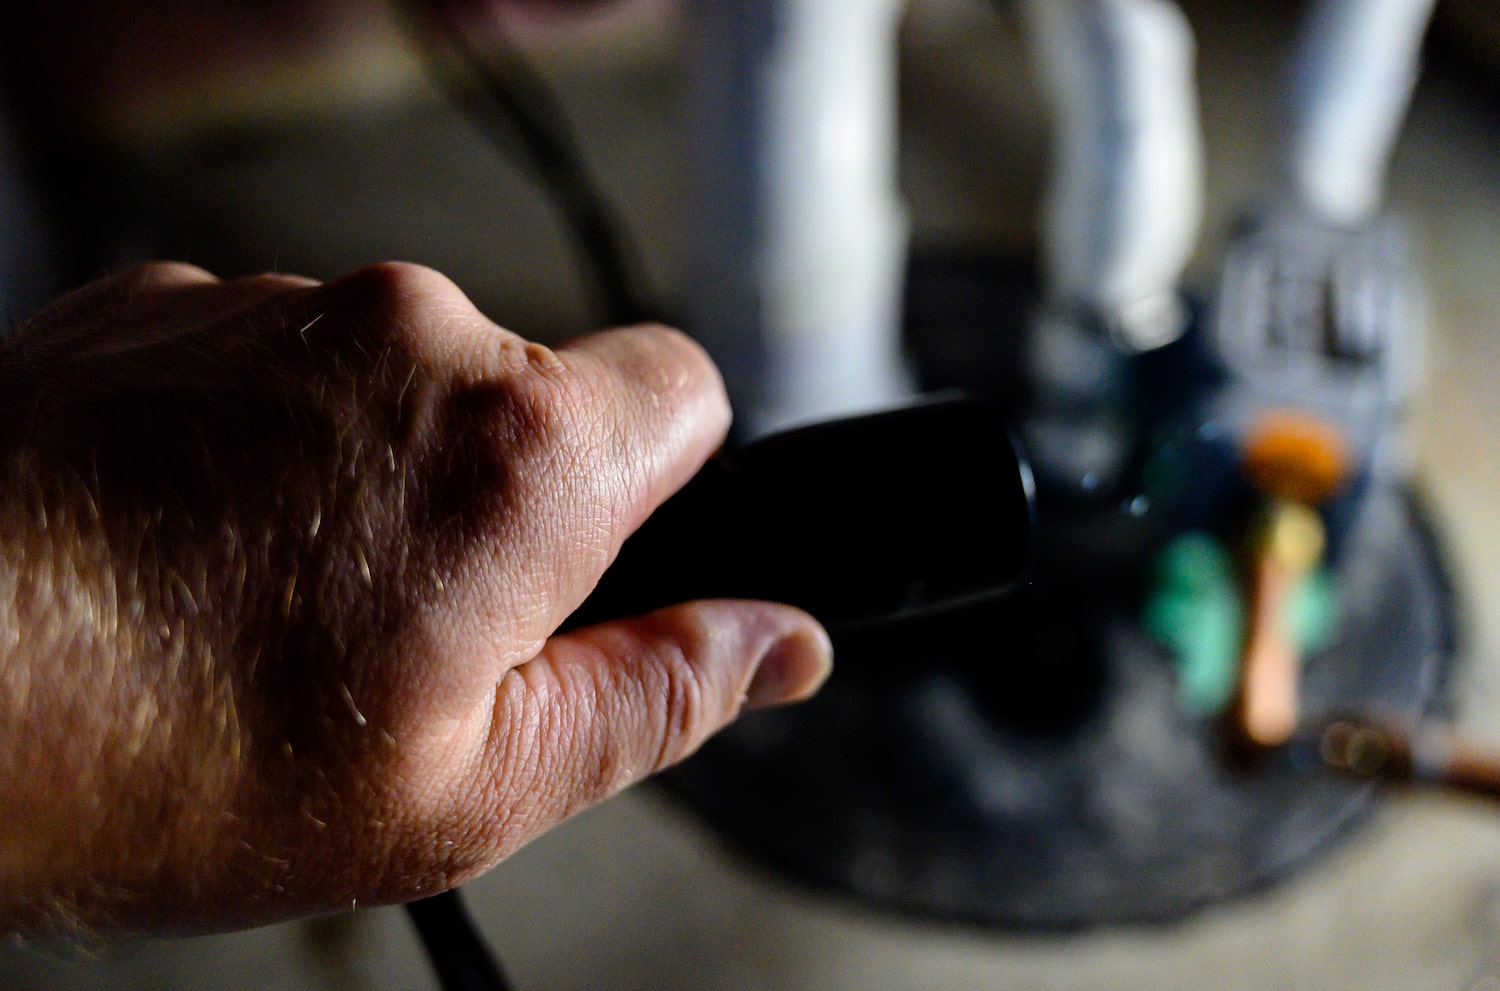 sump pump maintenance closeup of hand making home repairs on sump pump